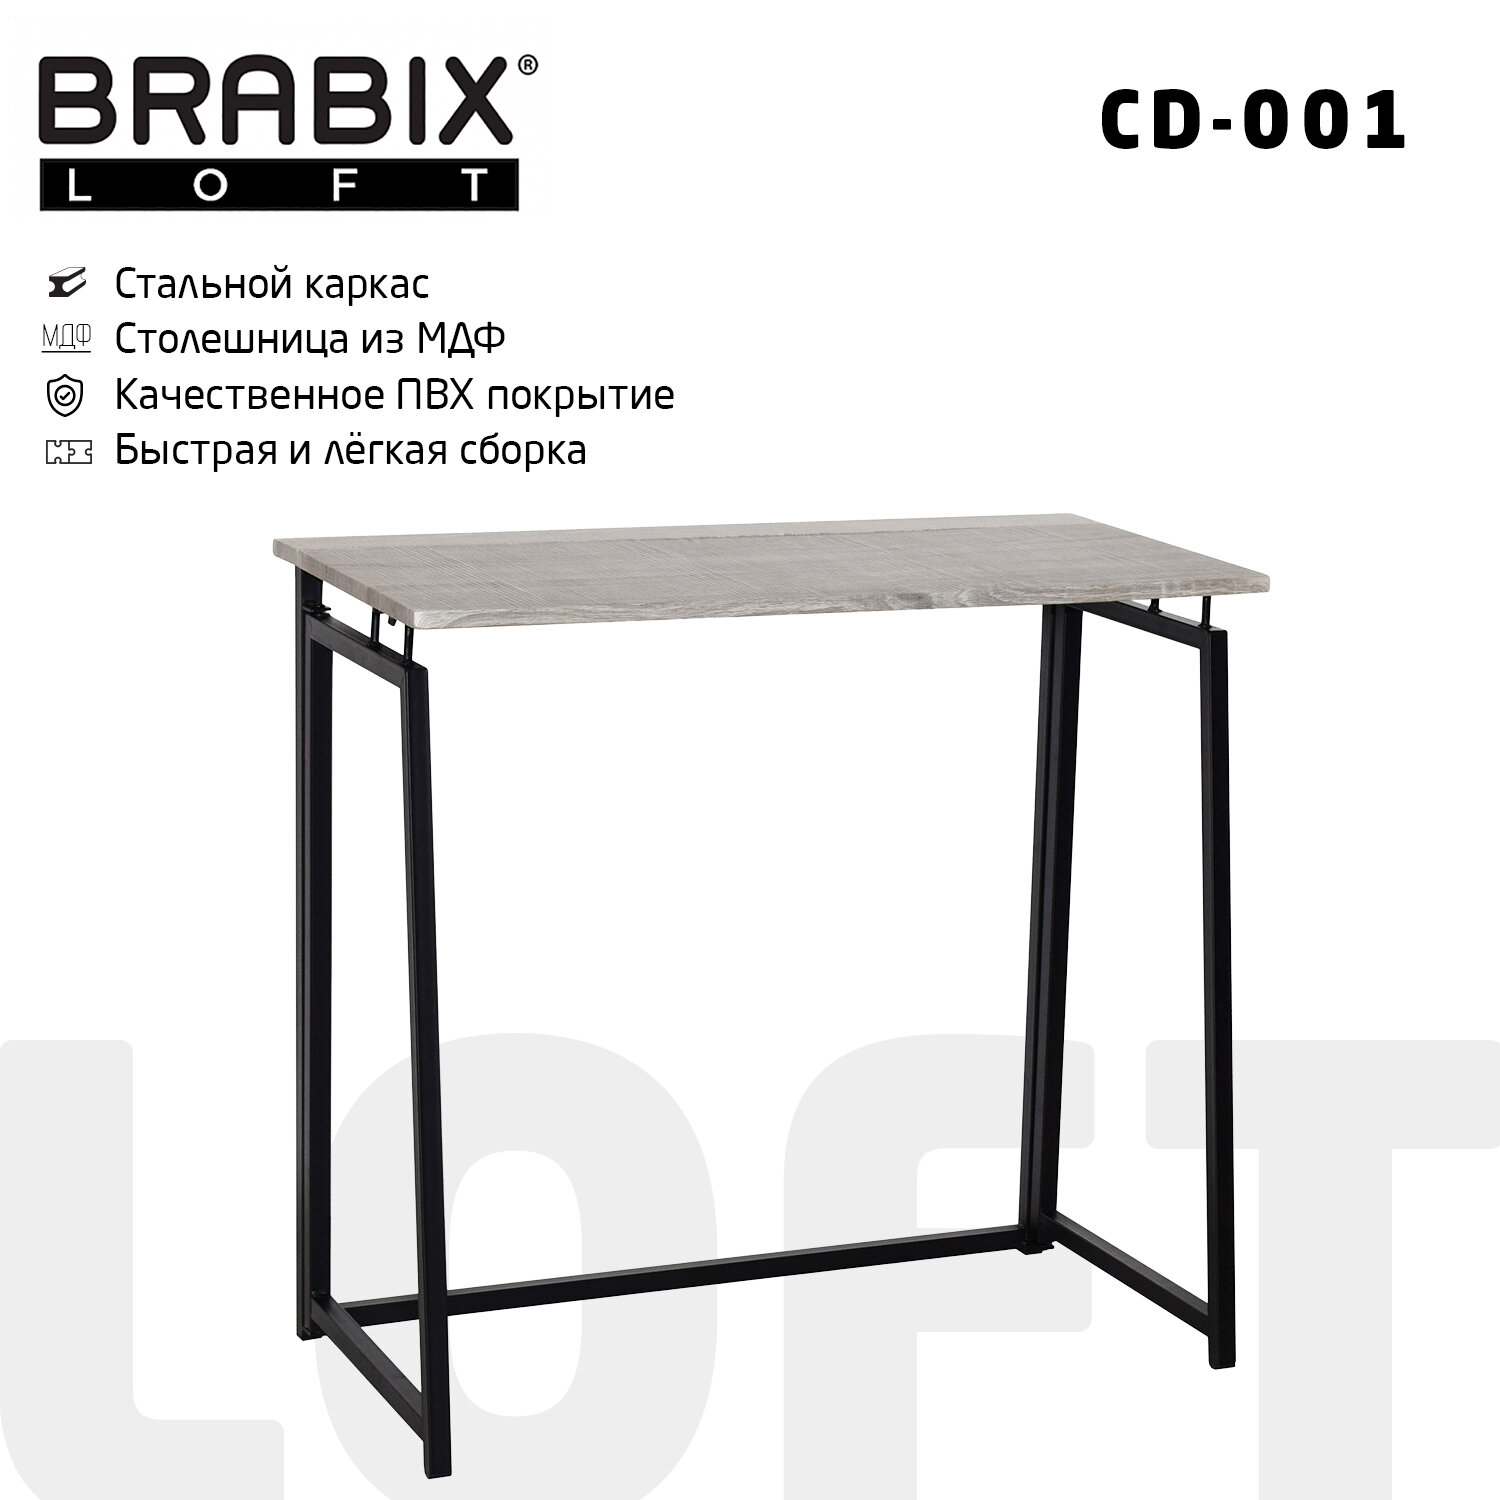 Brabix    BRABIX LOFT CD-001, 800440740 , ,   , 641210